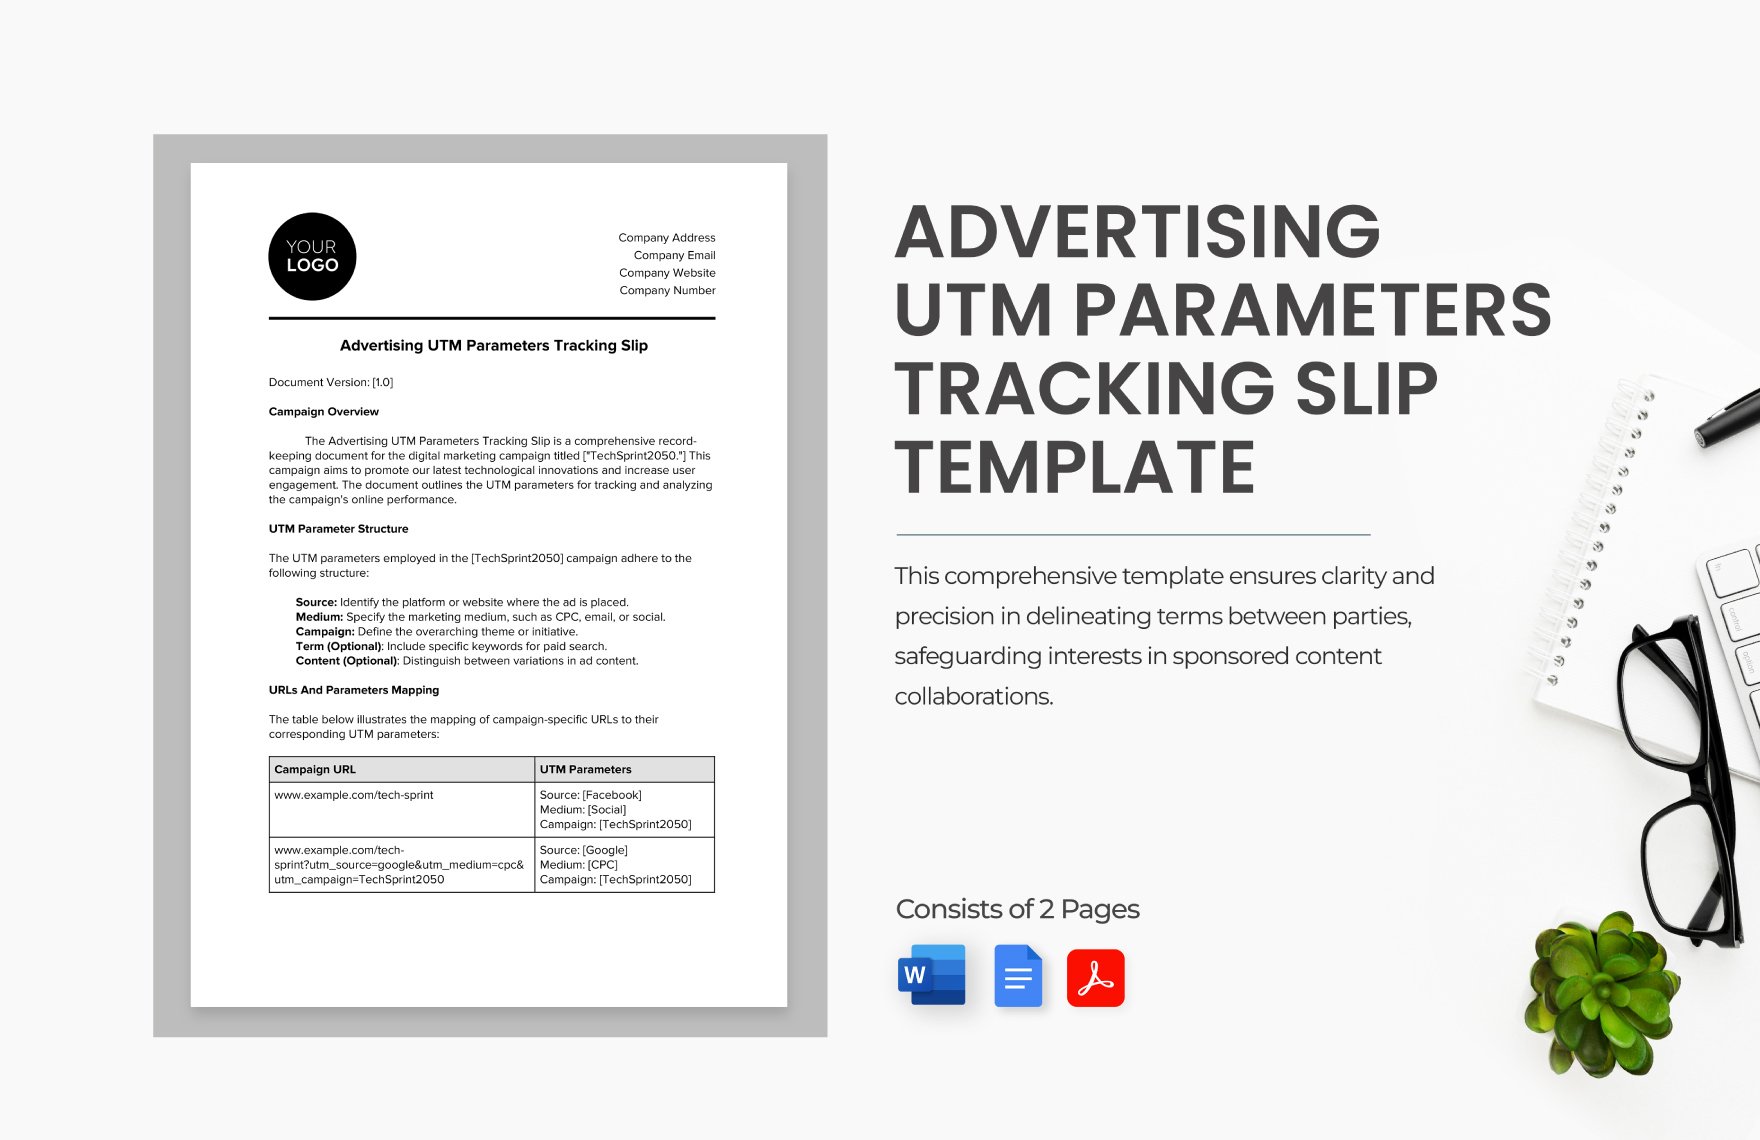 Advertising UTM Parameters Tracking Slip Template